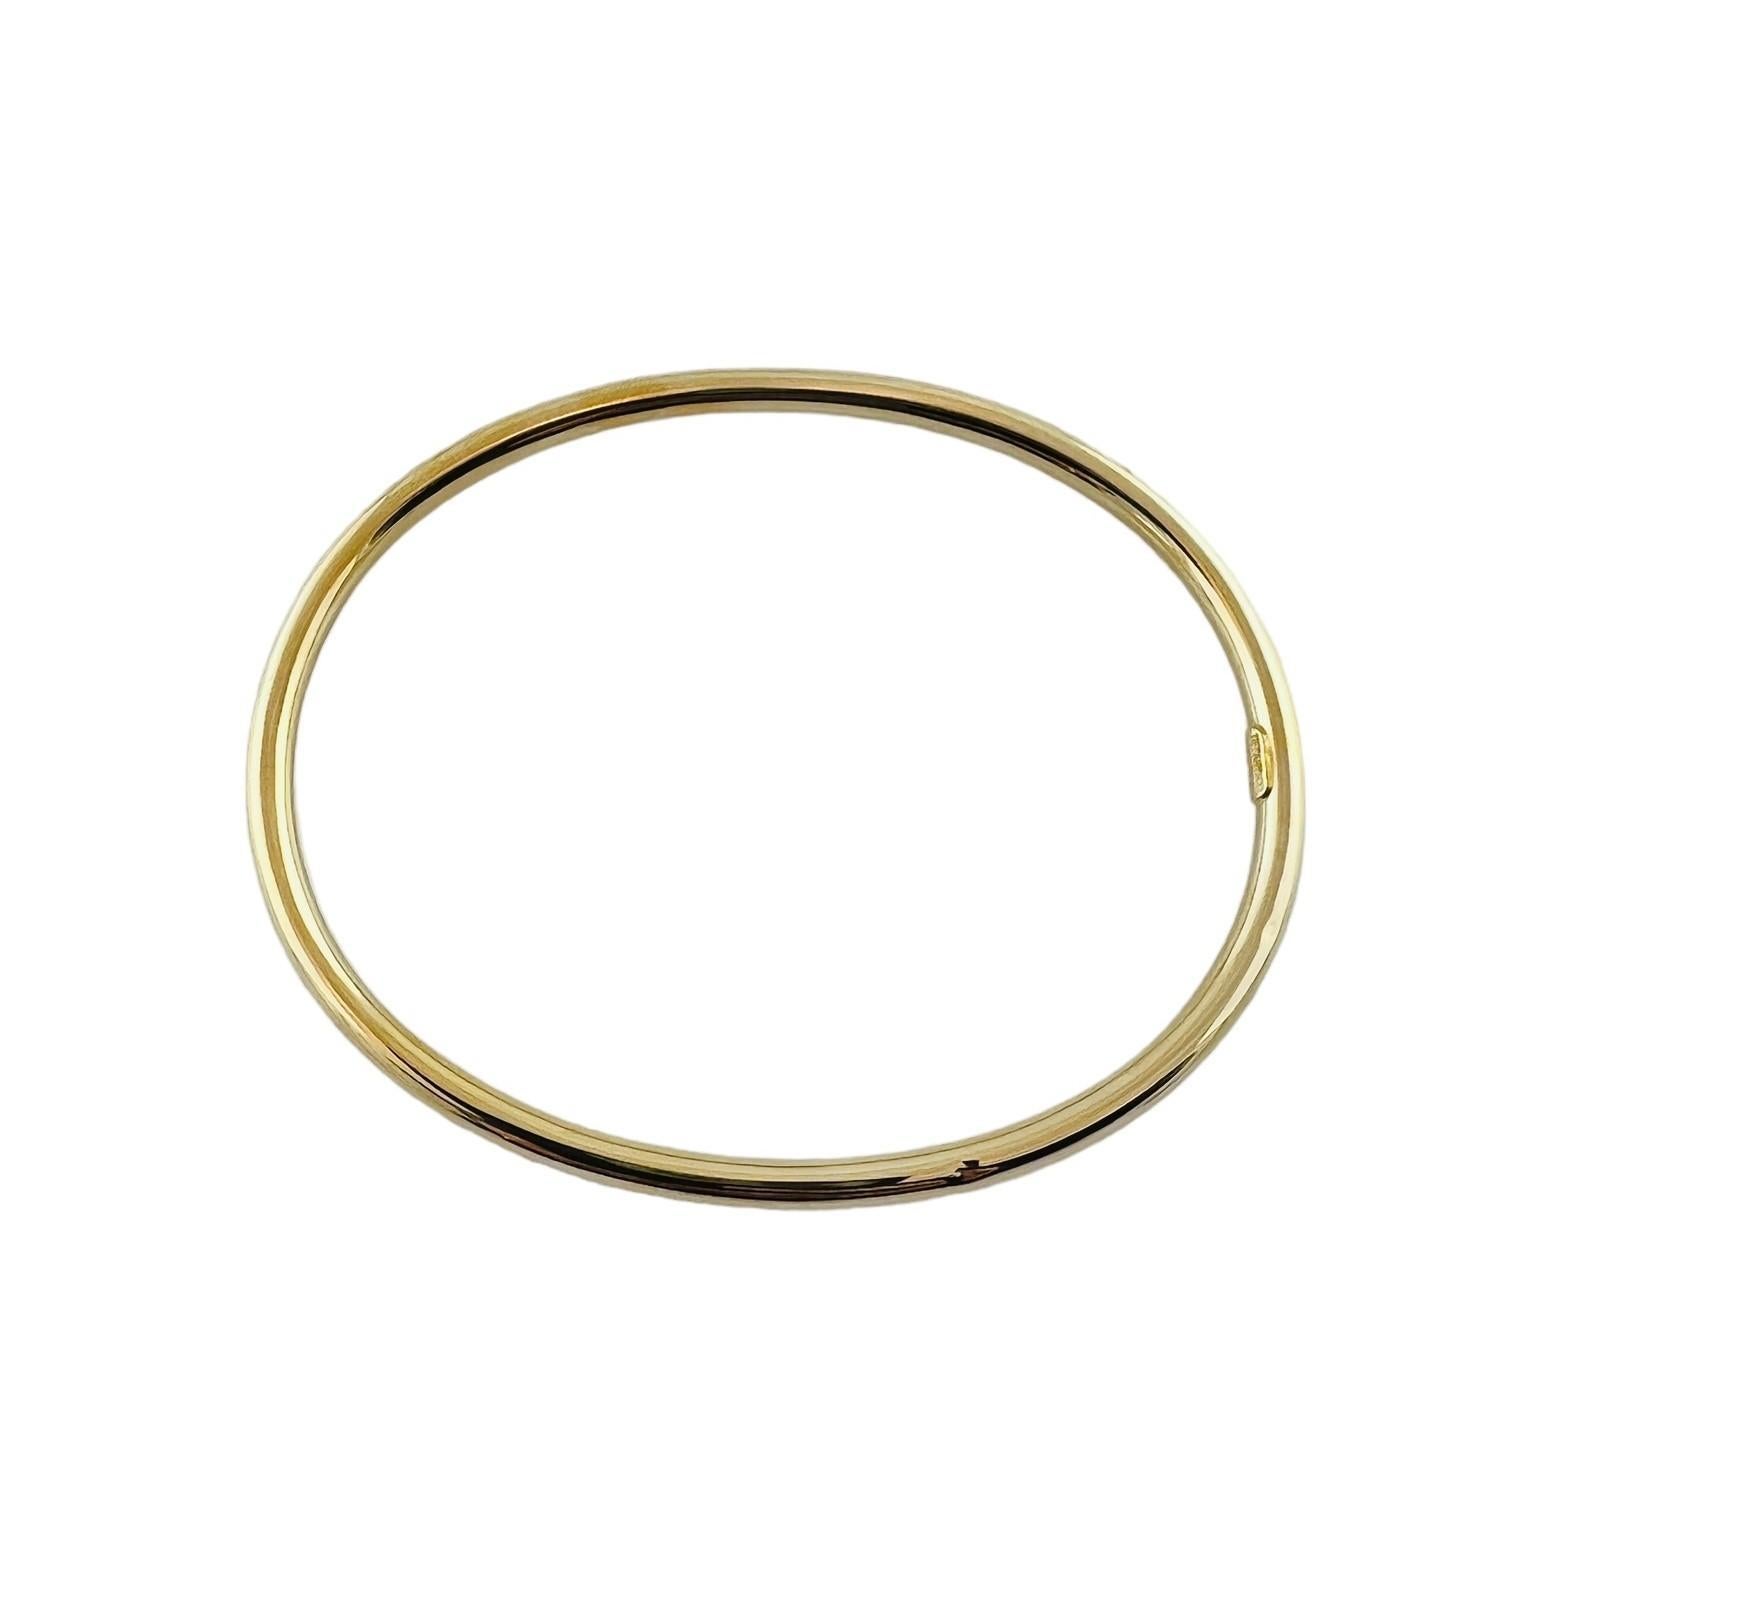 Tiffany & Co. 18K Yellow Gold Oval Bangle Bracelet #16746 2